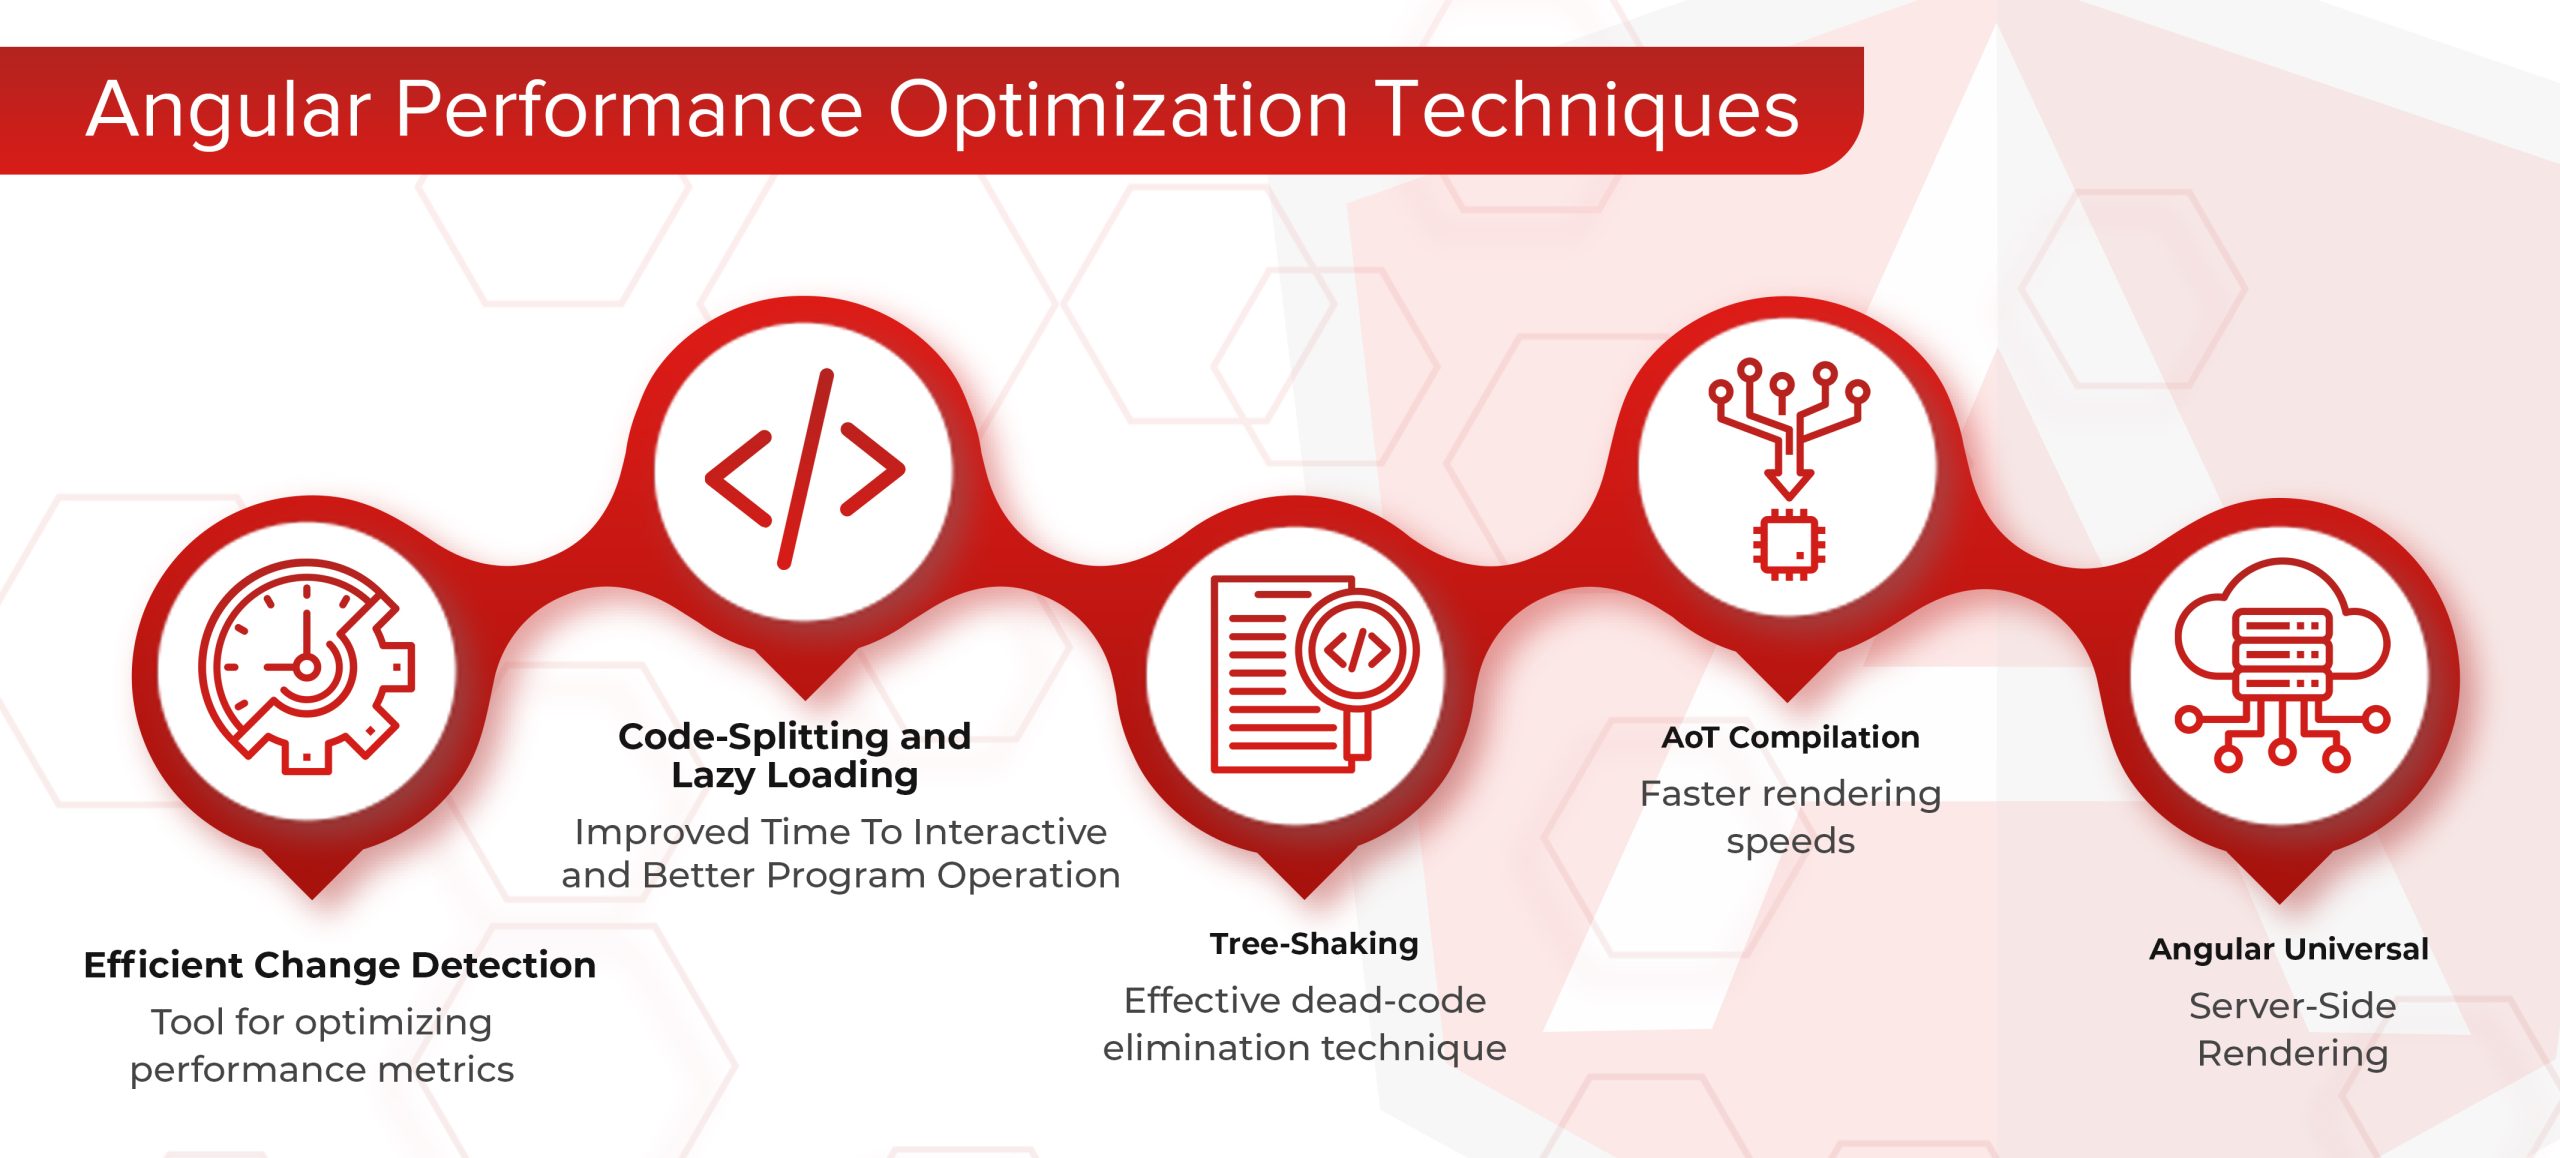 Ways to Angular Performance optimization techniques